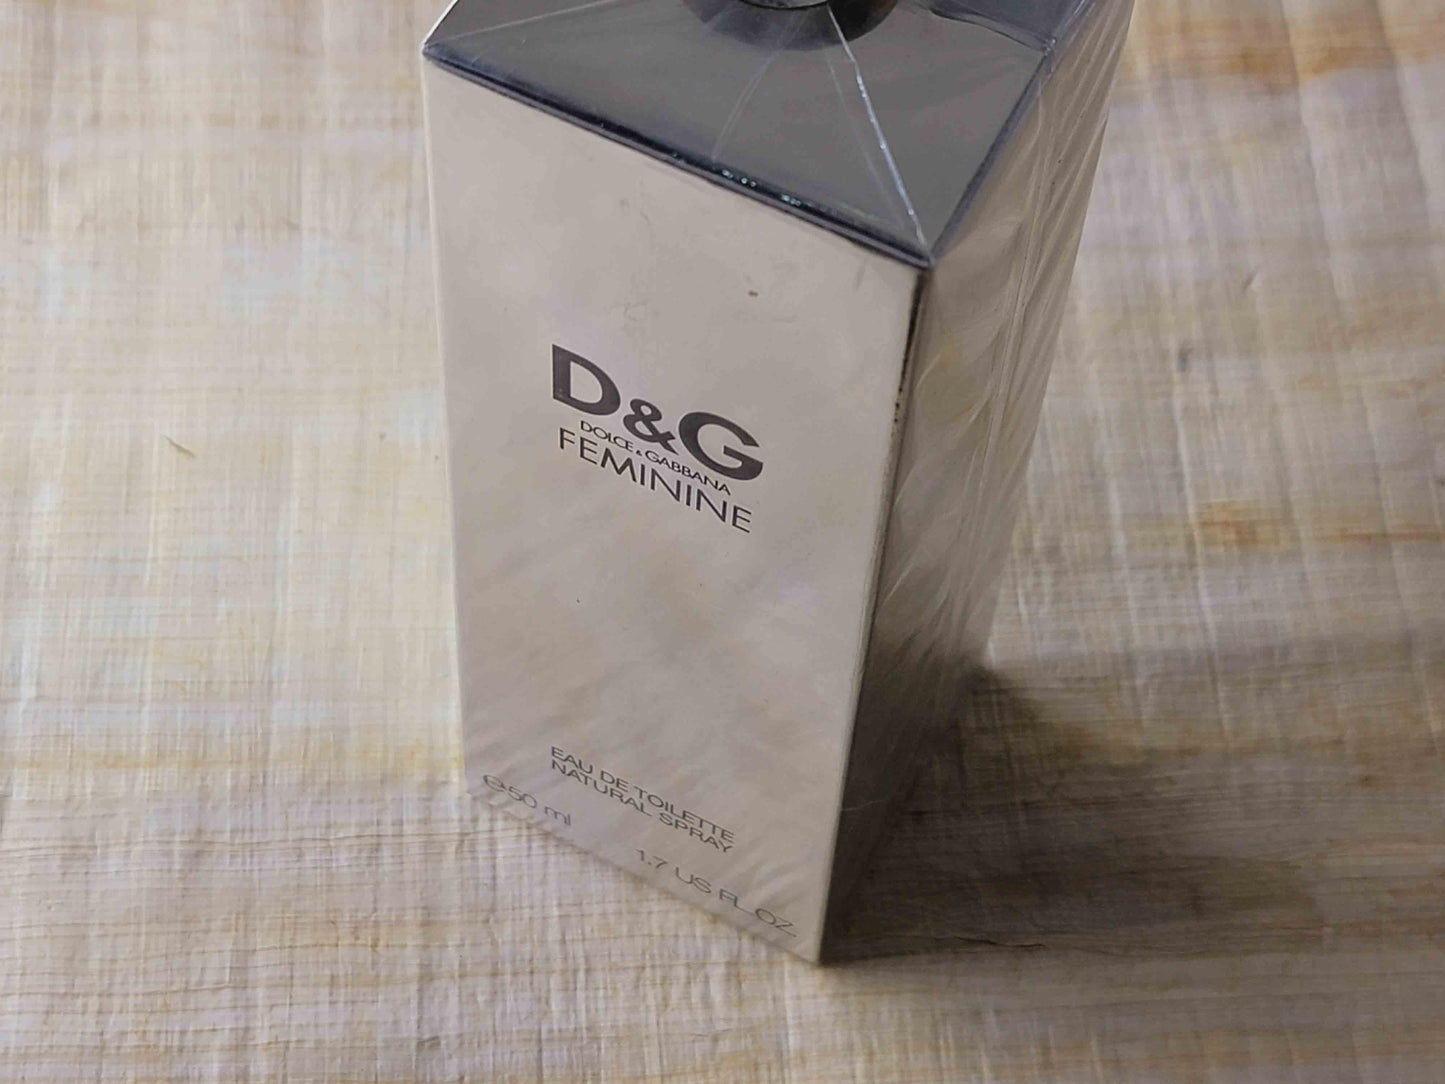 Dolce & Gabbana Feminine EDT Spray 100 ml 3.4 oz Or 50 ml 1.7 oz, Vintage, Rare